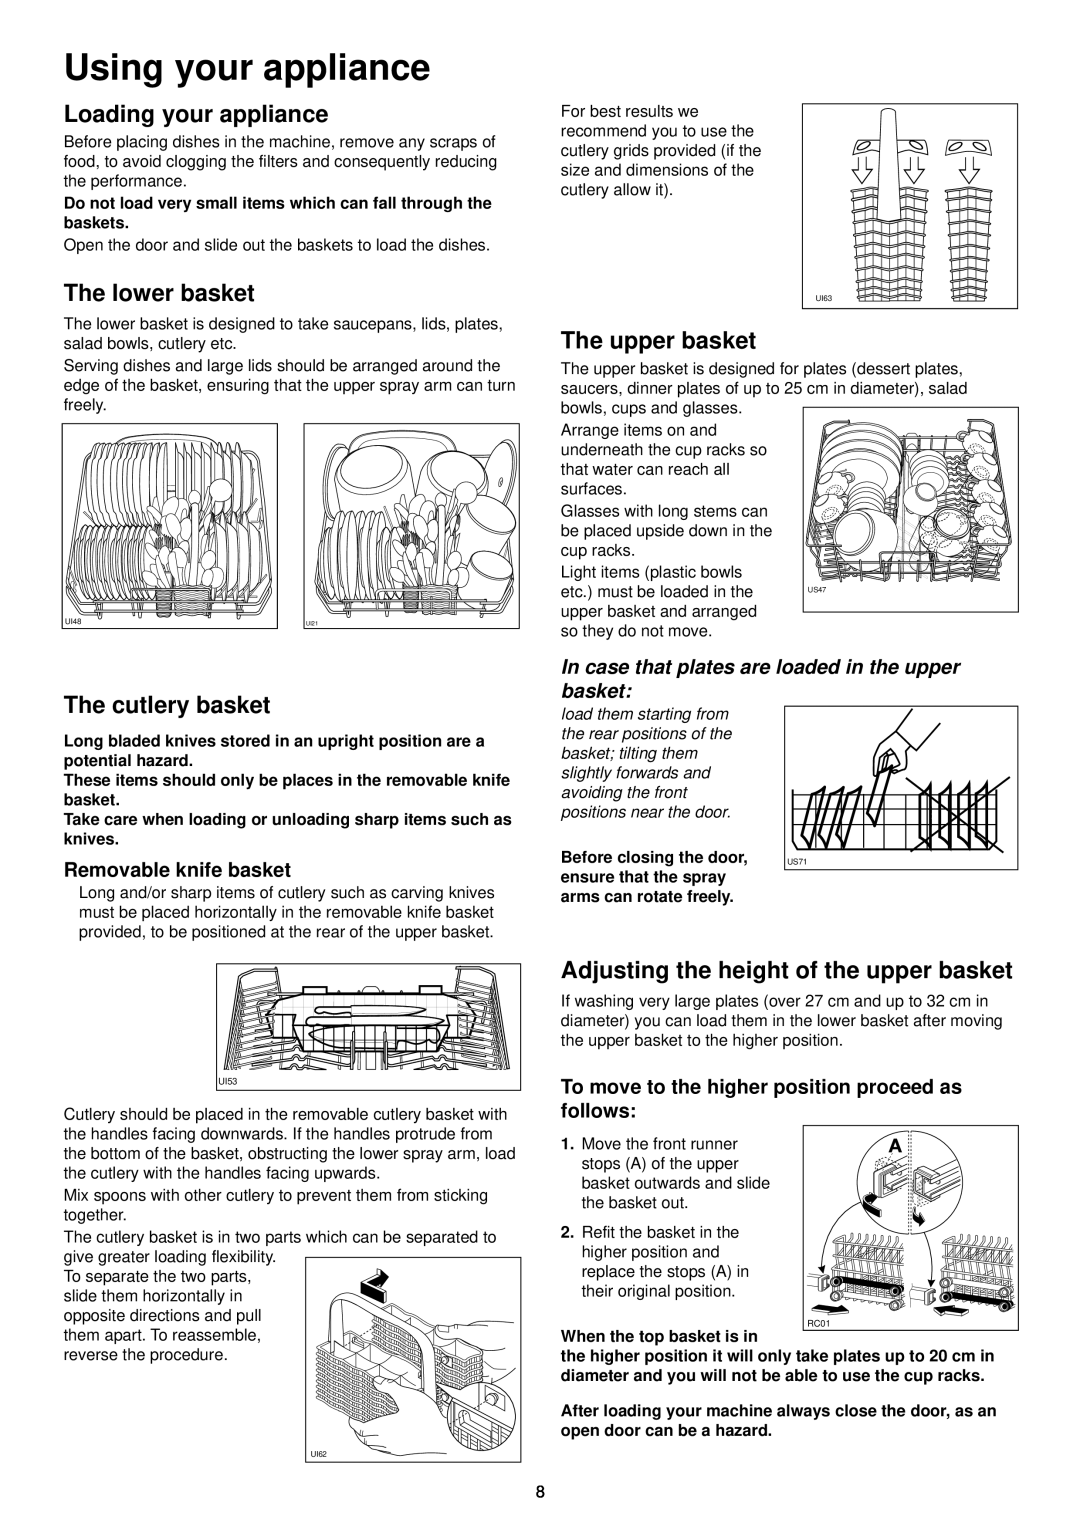 Zanussi DE 6850 manual Using your appliance, Loading your appliance, The lower basket, The upper basket, The cutlery basket 